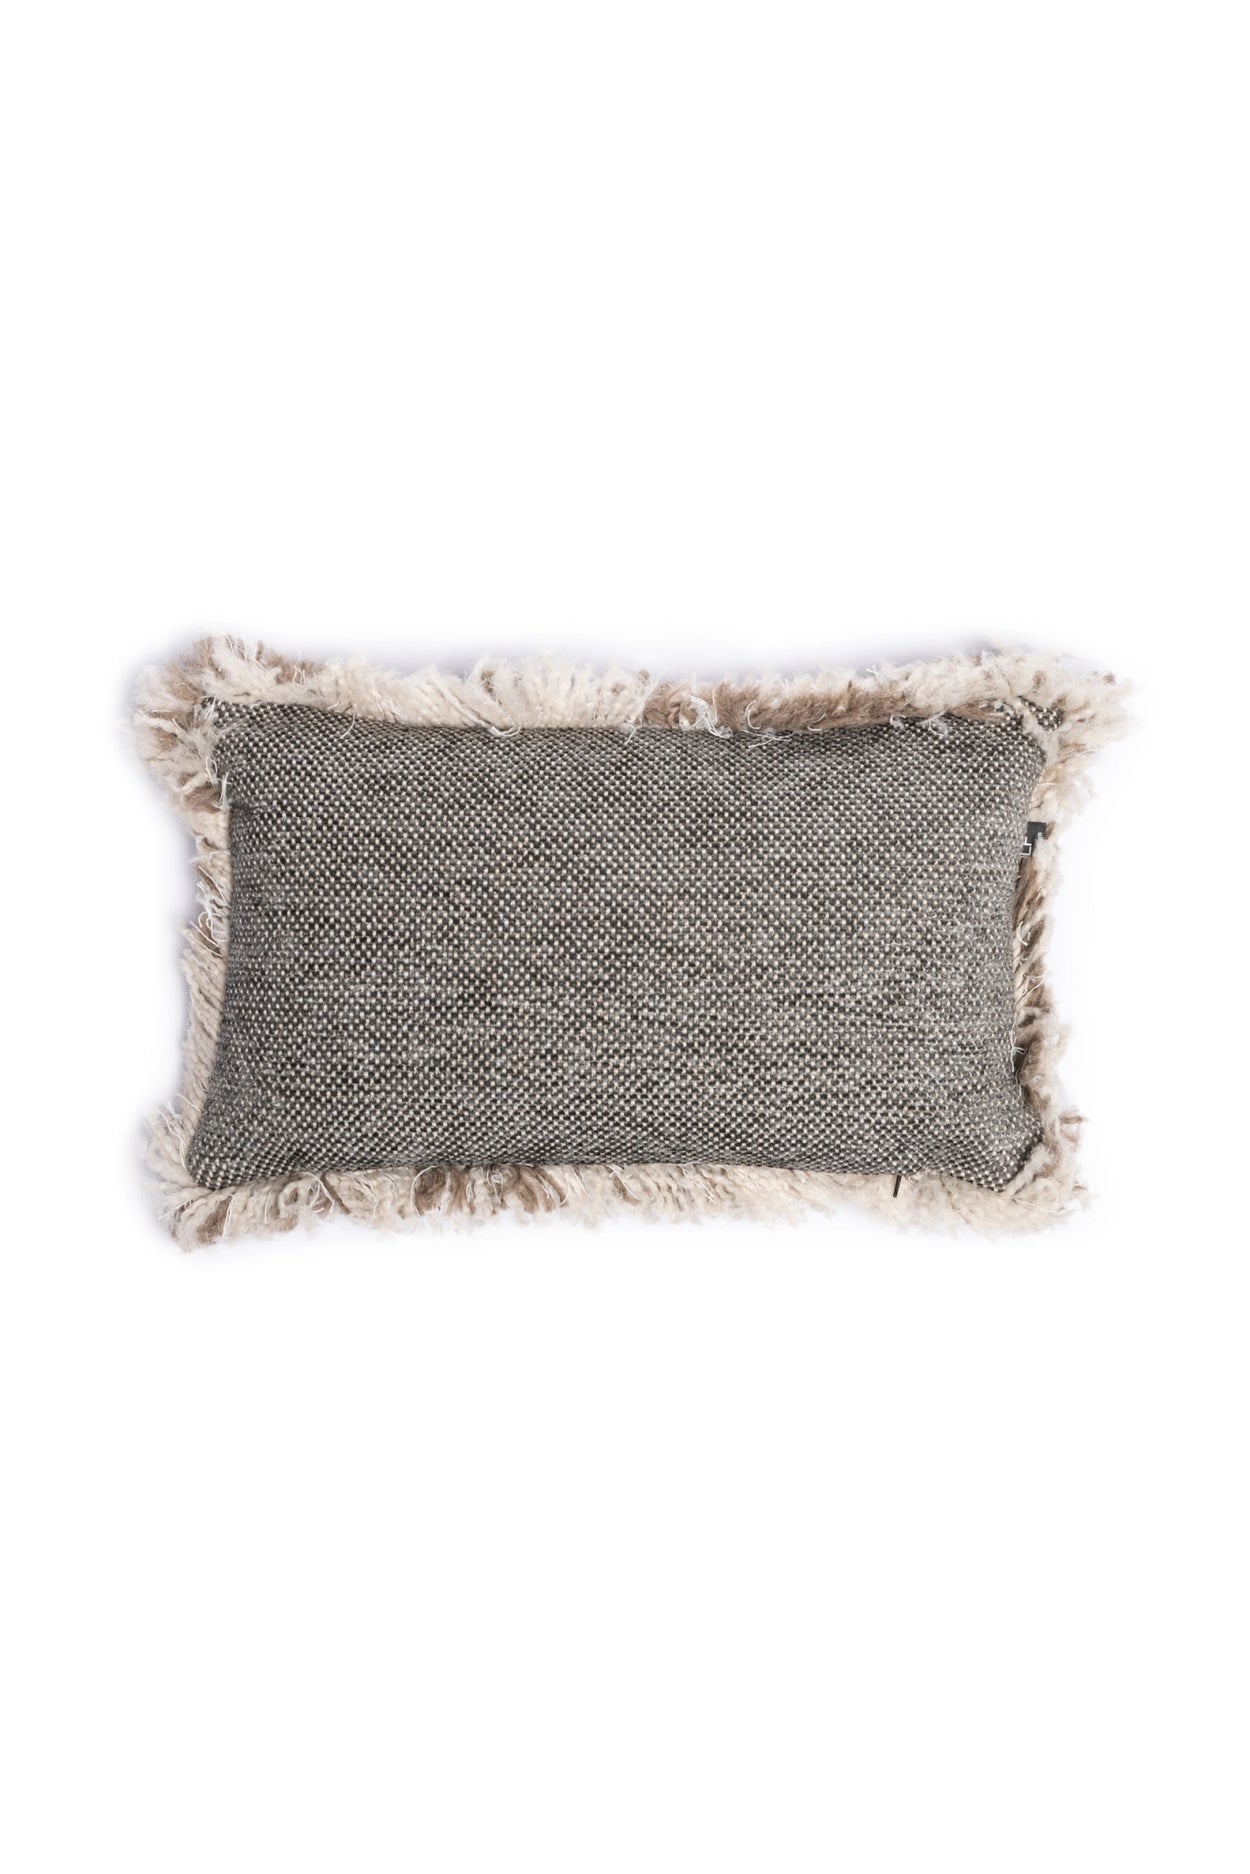 Silky Cushion 30 x 50 cm